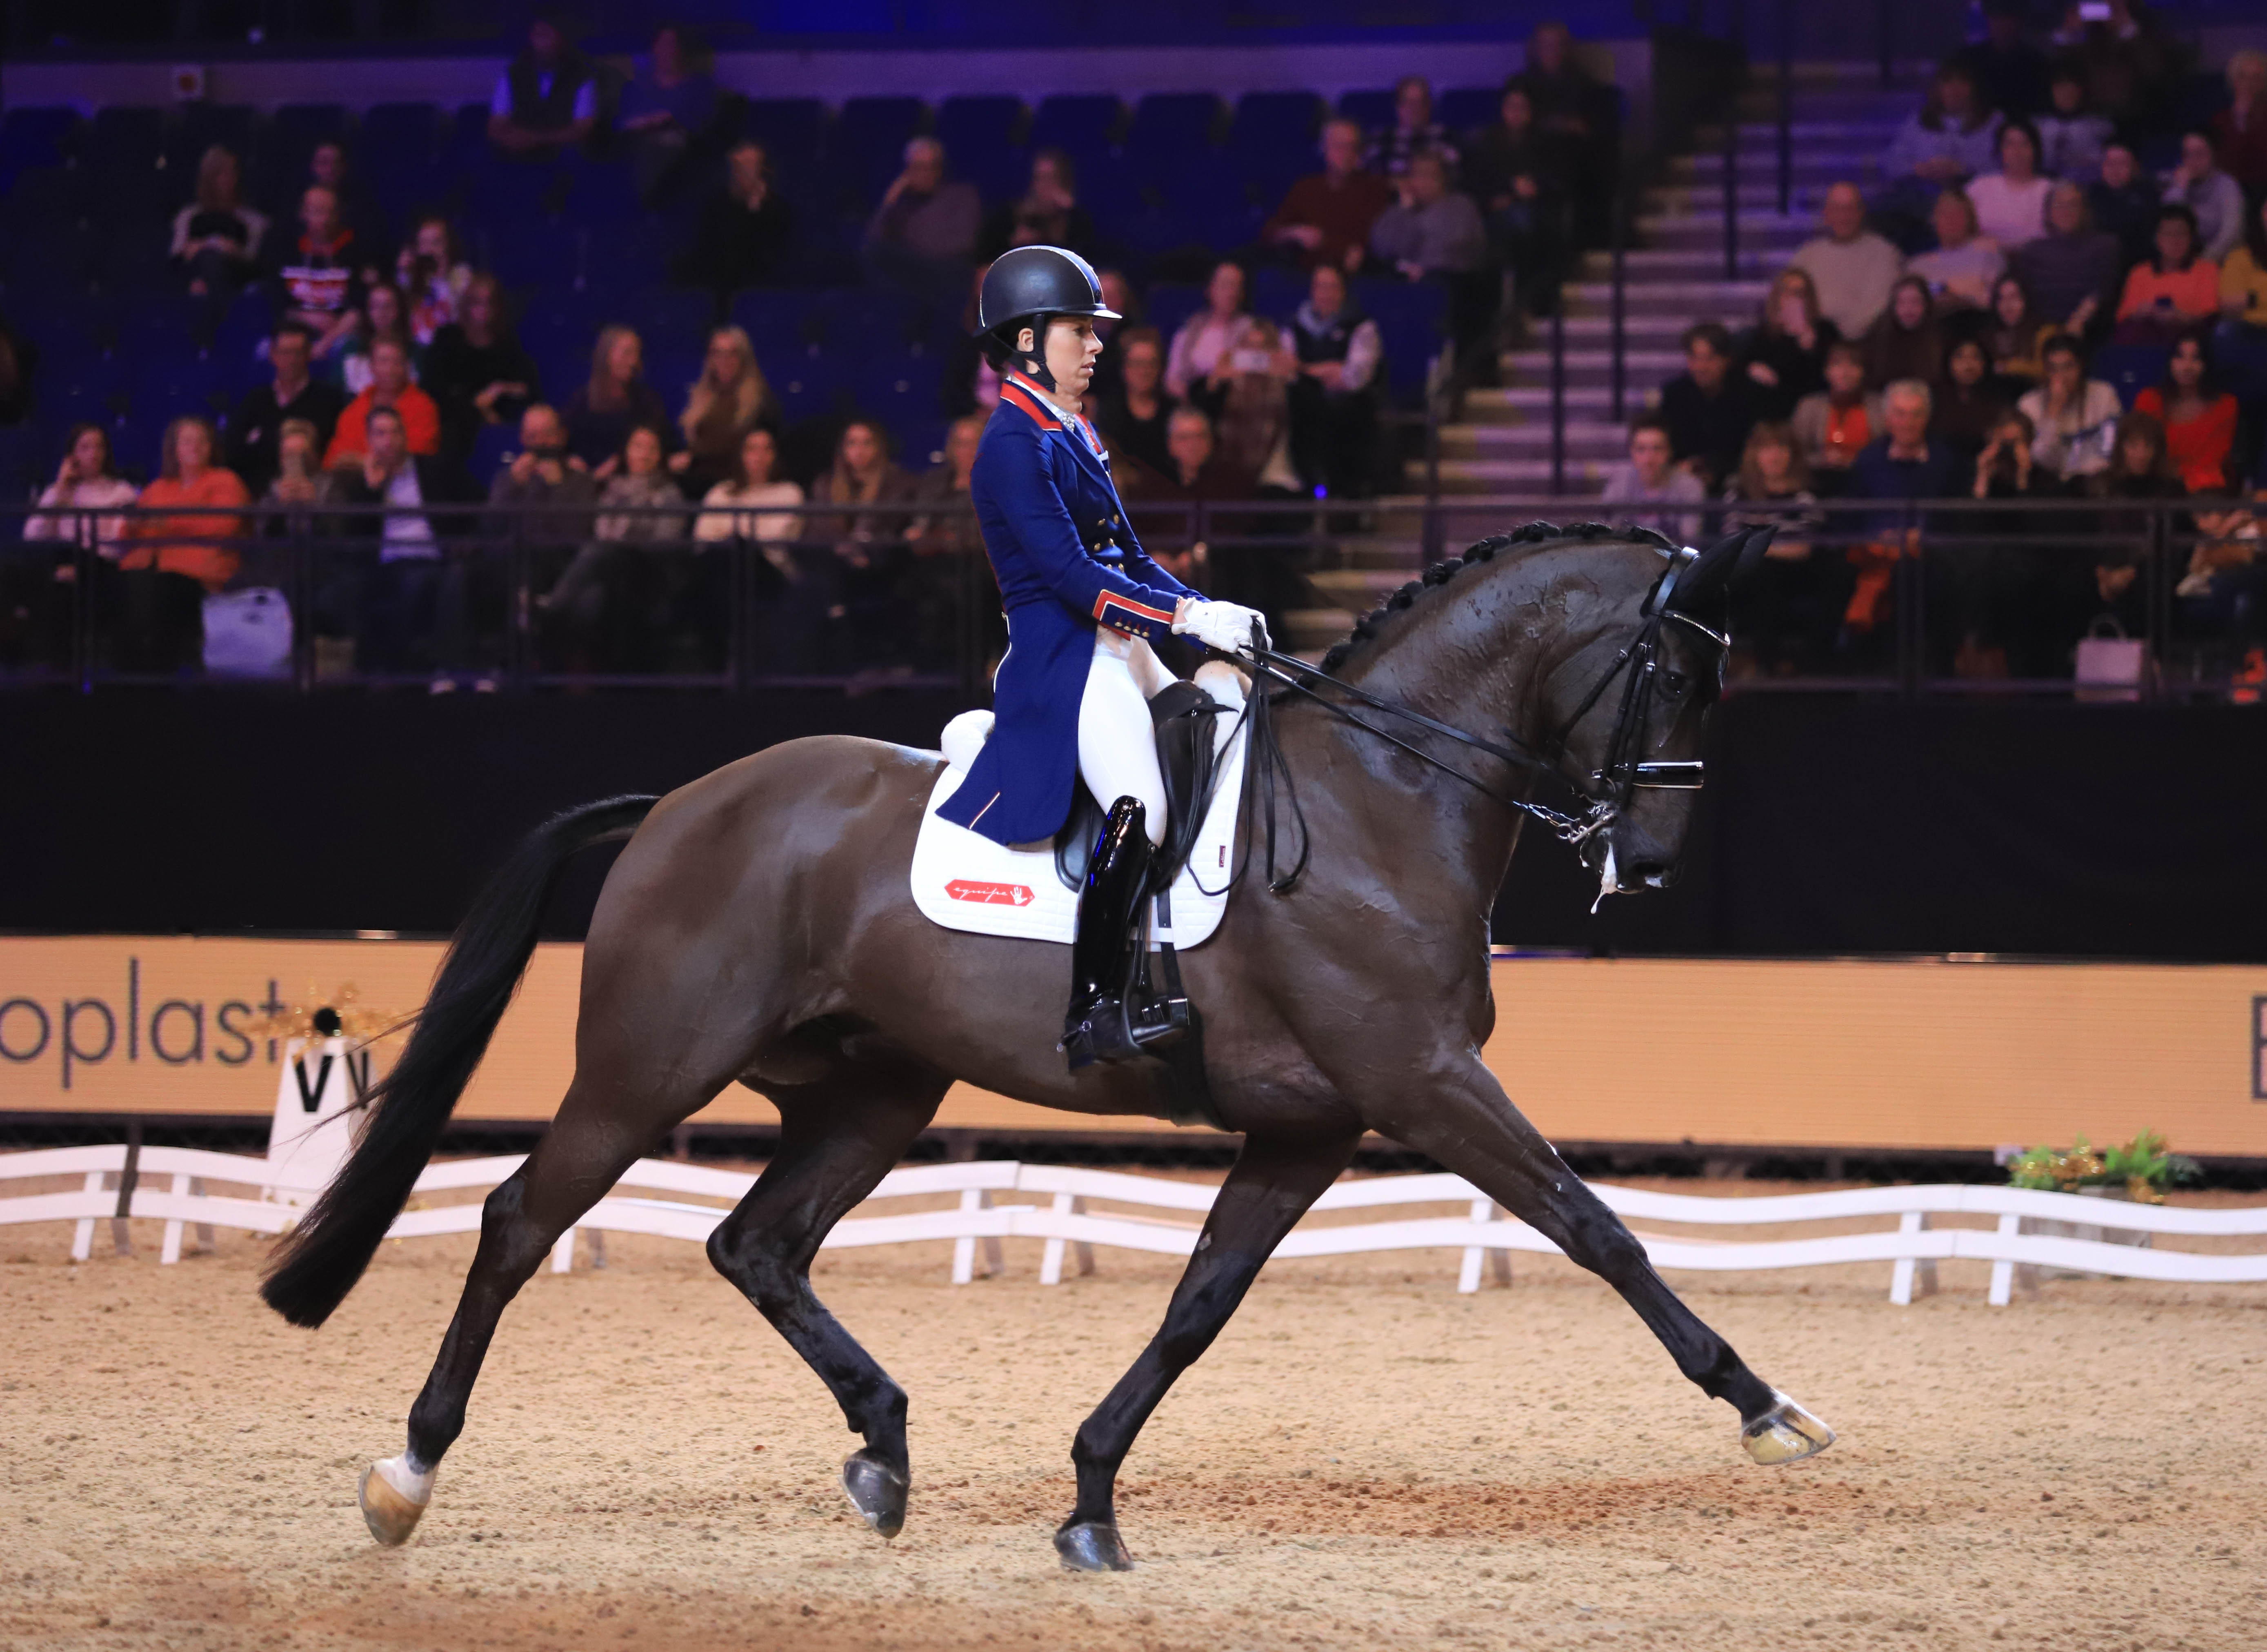 Liverpool International Horse Show - Dressage - Charlotte Dujardin